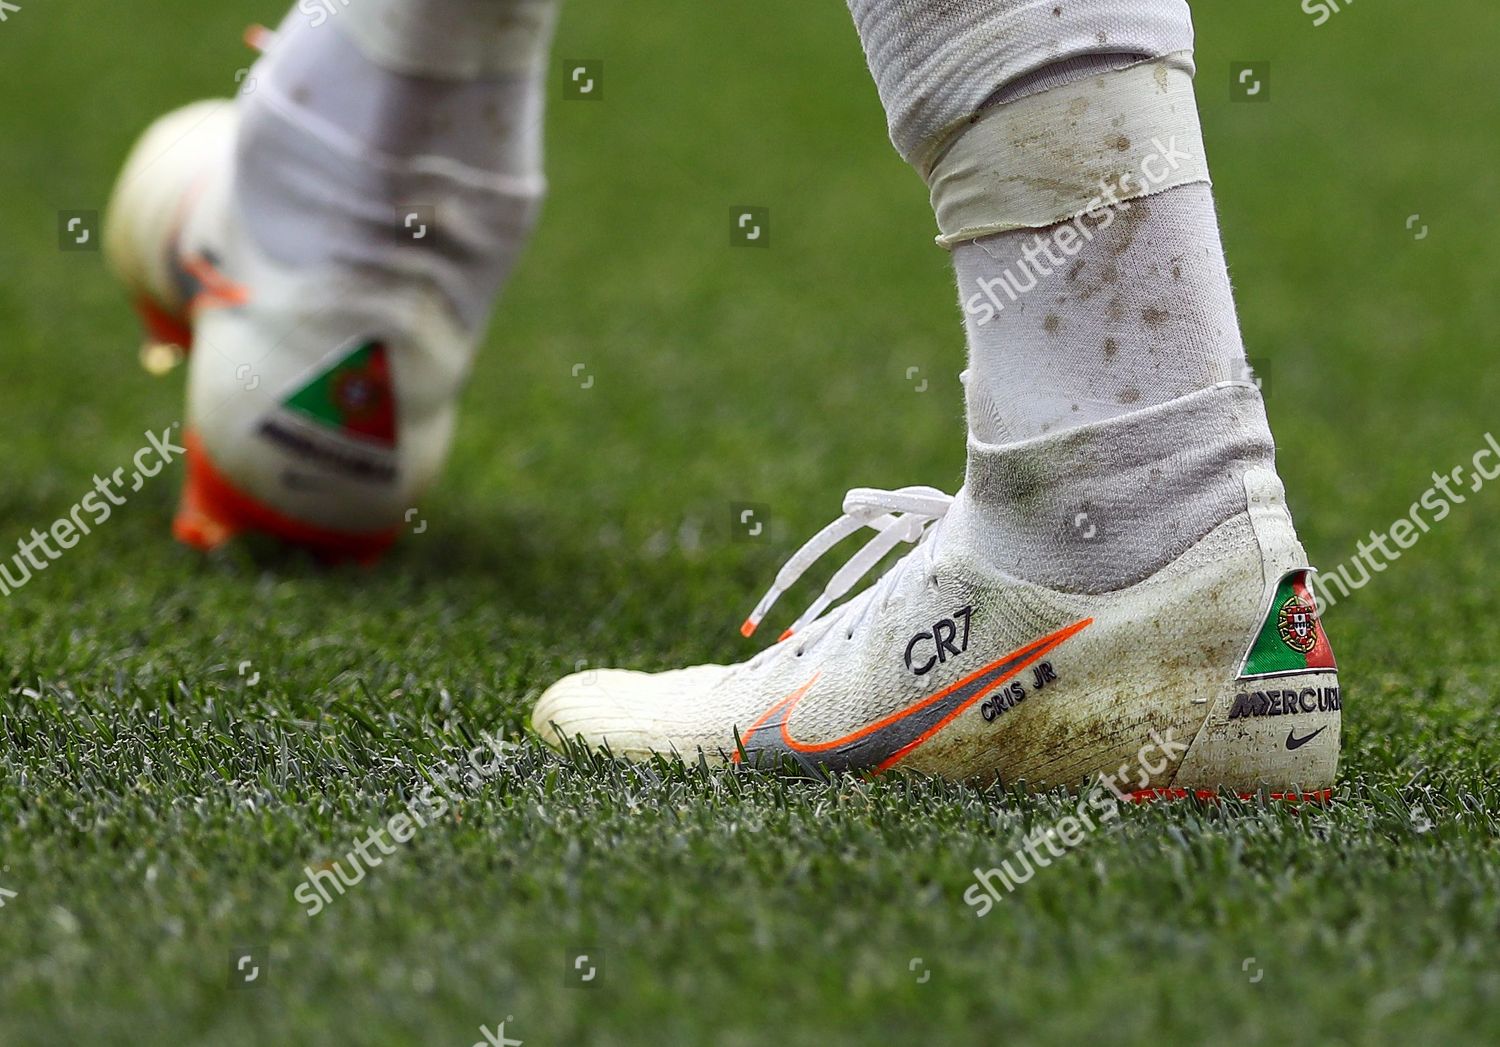 Personalised Boots Cristiano Ronaldo Portugal Stock Photo - Image | Shutterstock